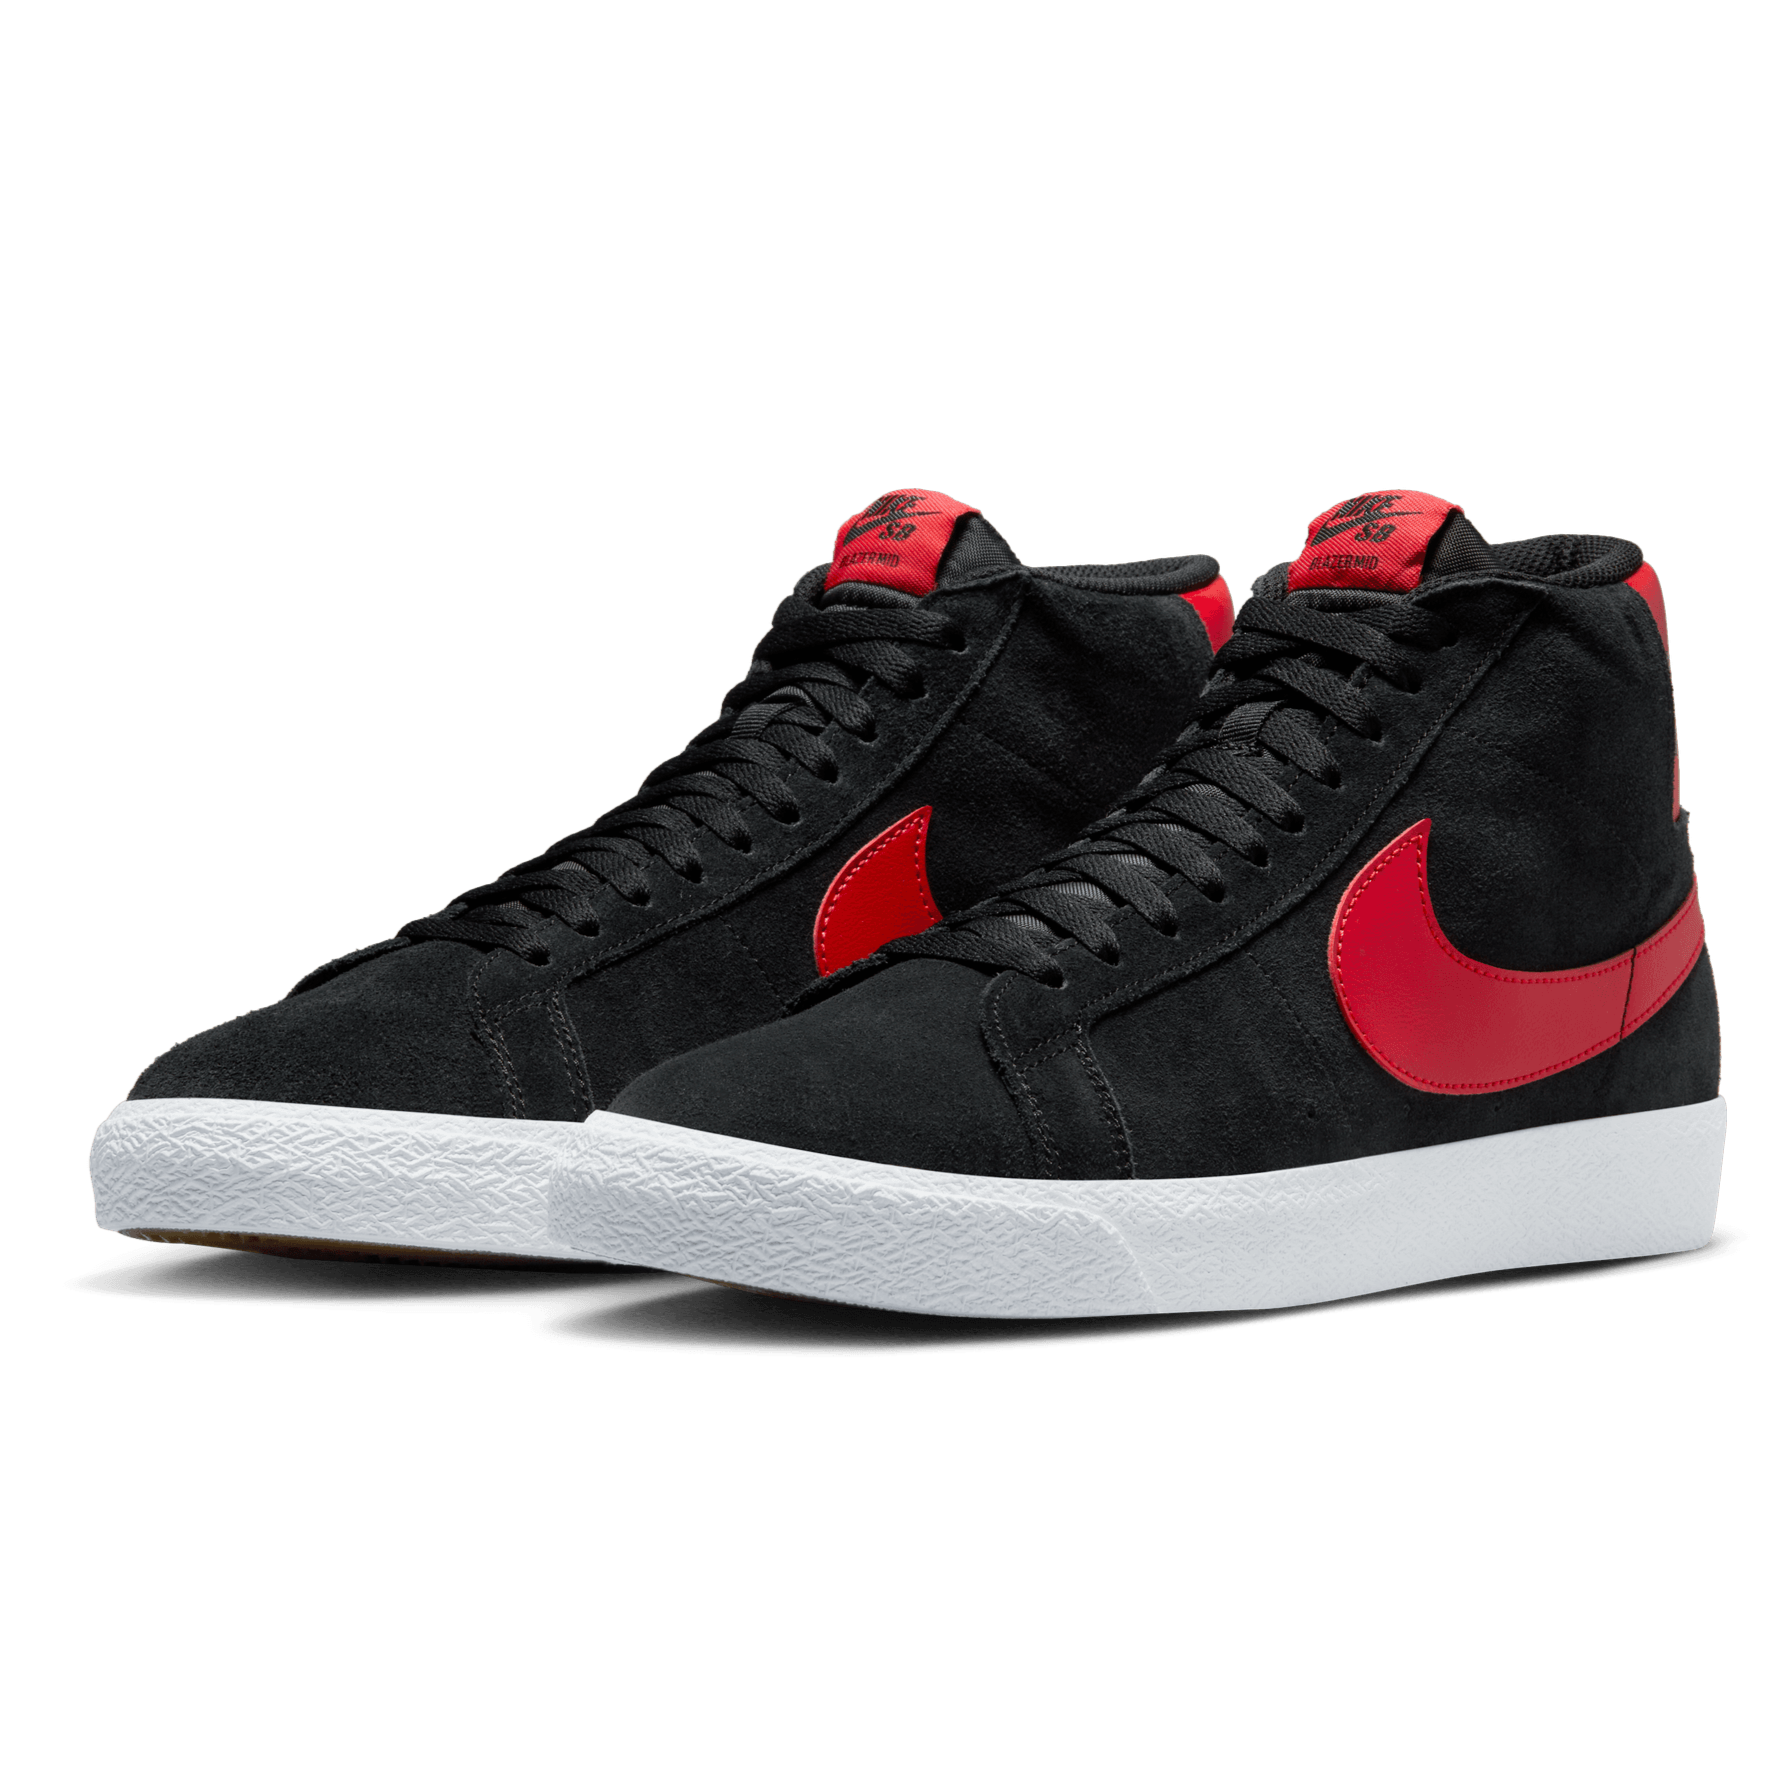 Black/Red Blazer Mid Nike SB Skate Shoe Front